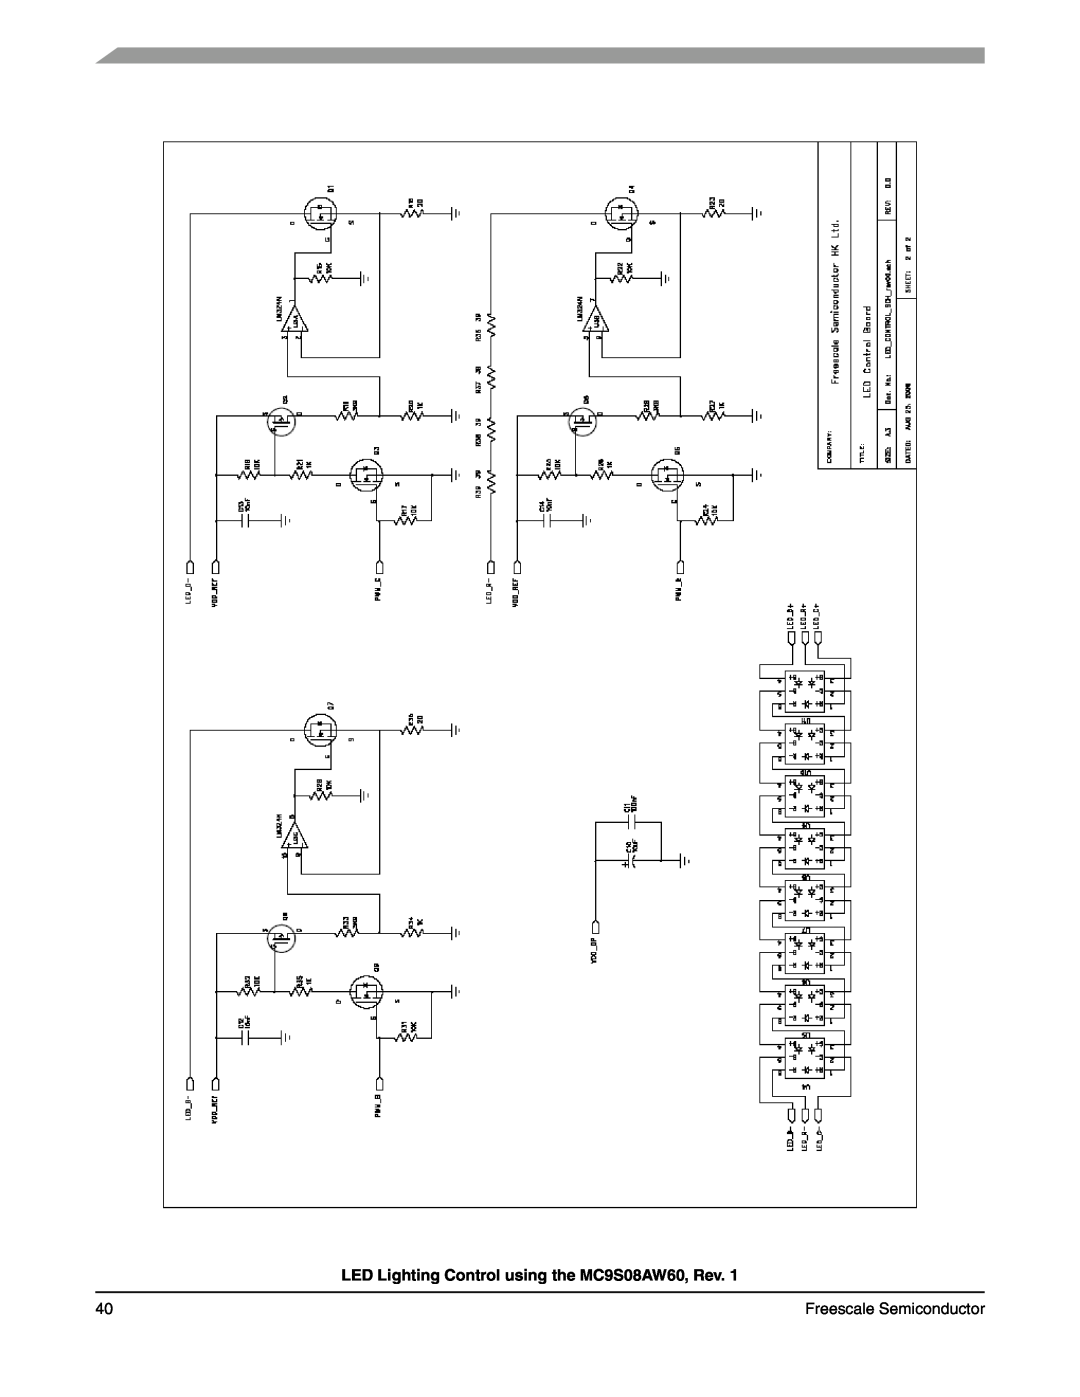 Freescale Semiconductor manual LED Lighting Control using the MC9S08AW60, Rev, Freescale Semiconductor 